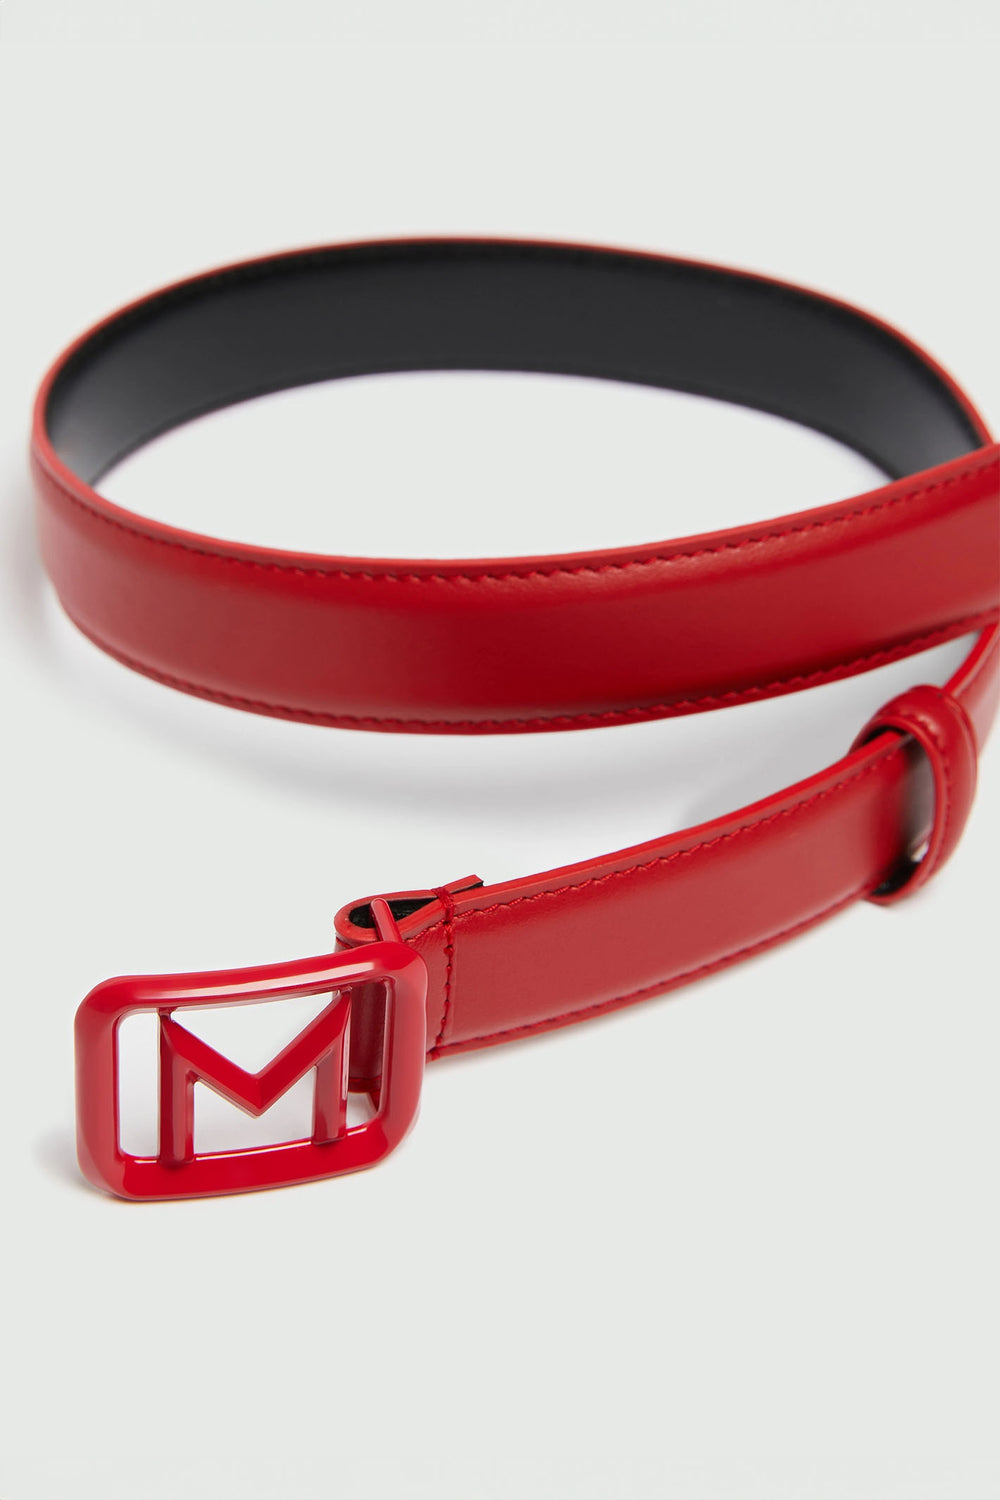 Marella Pressa 2423506036200 Red Leather Belt - Olivia Grace Fashion